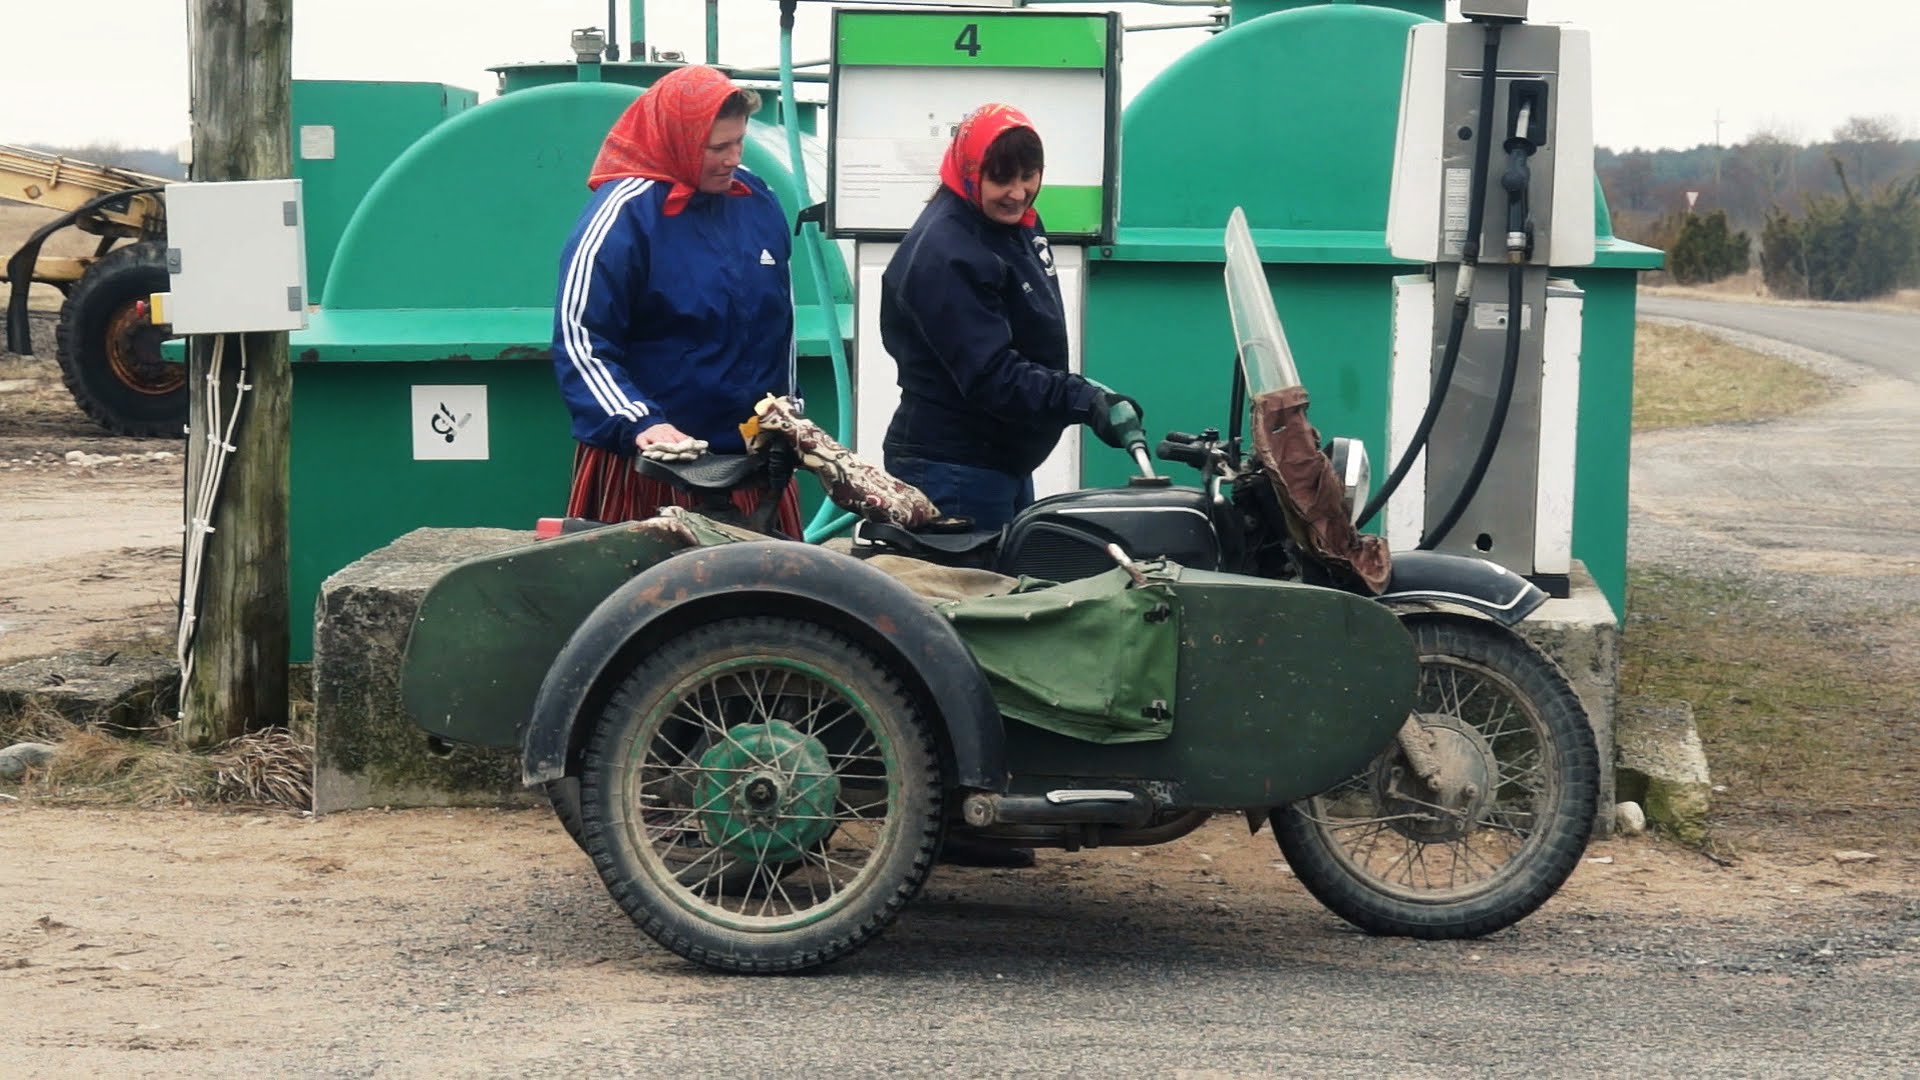 Old motors as tradition in Estonia - vpro Metropolis - YouTube